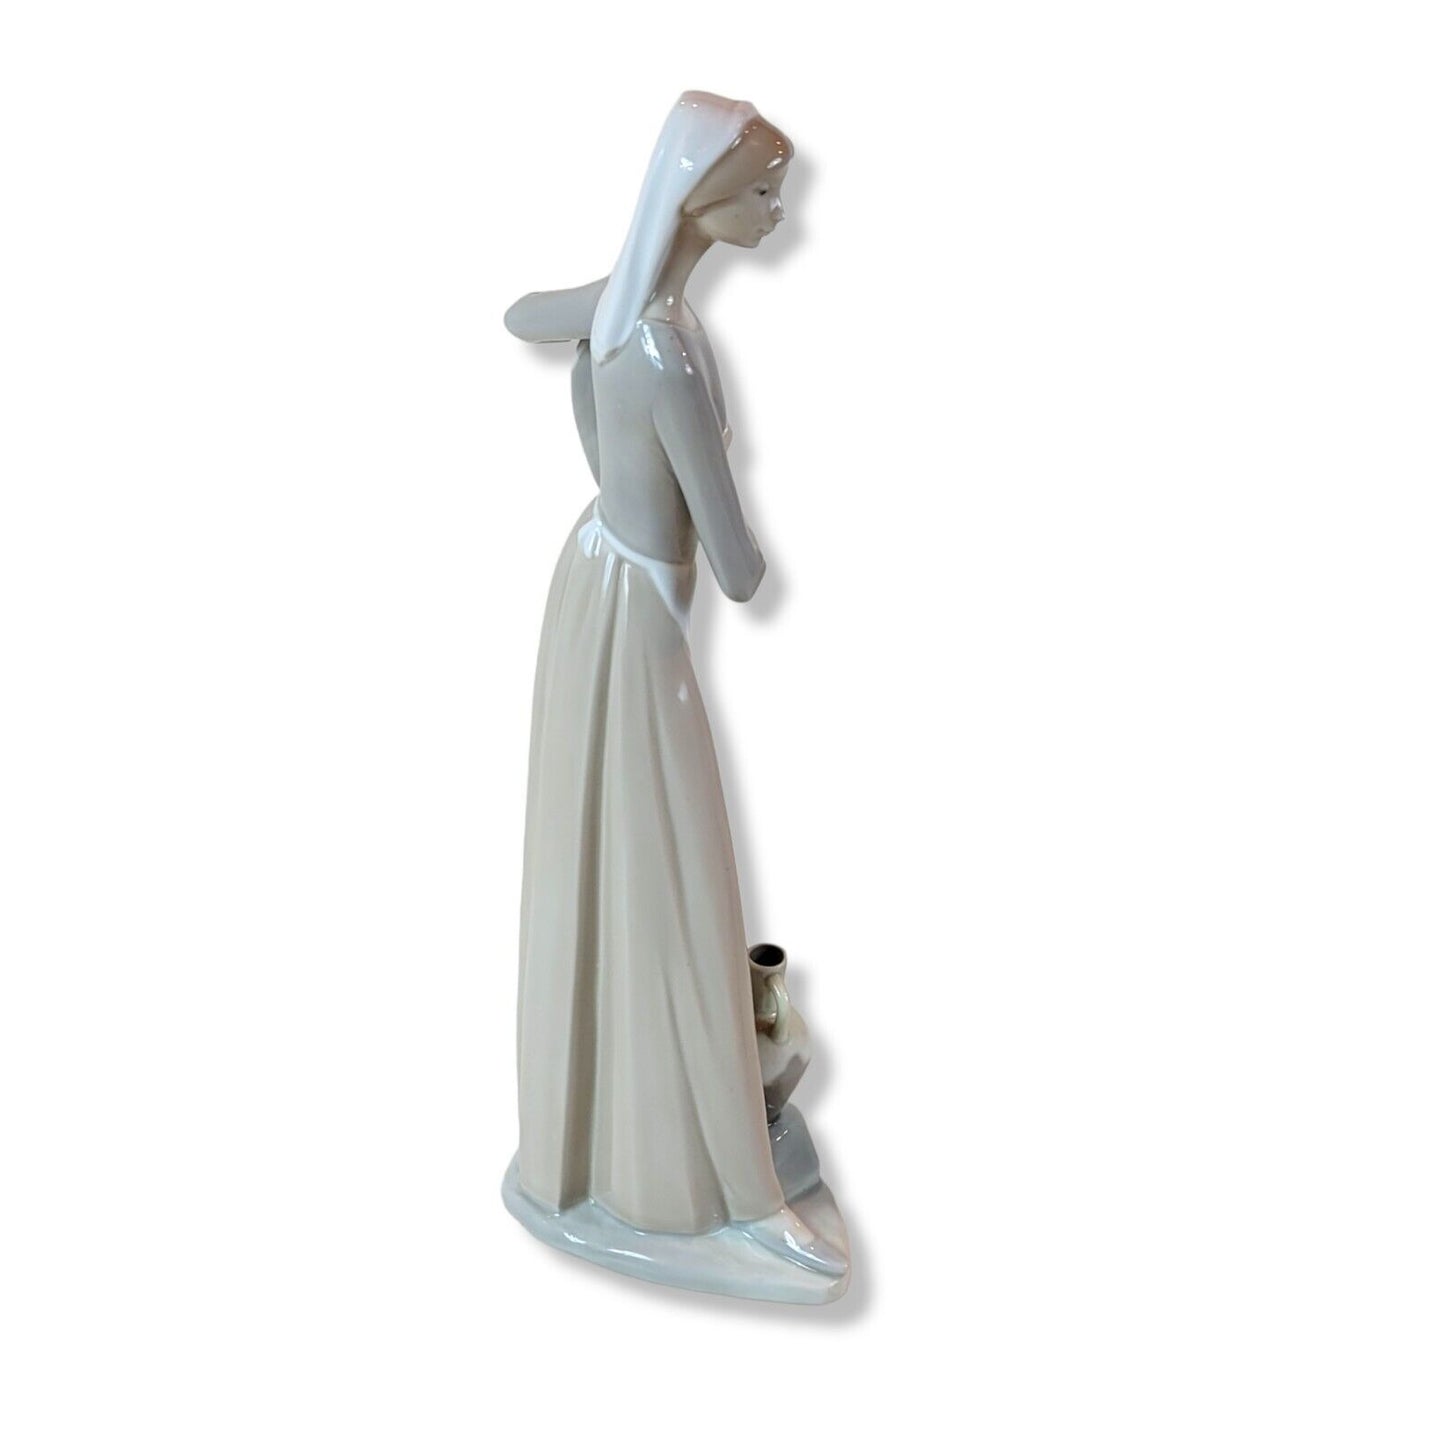 NAO LLADRO Tall Girl With Water Jugs Italian Figurine Sculpture 12-3/4" #4875